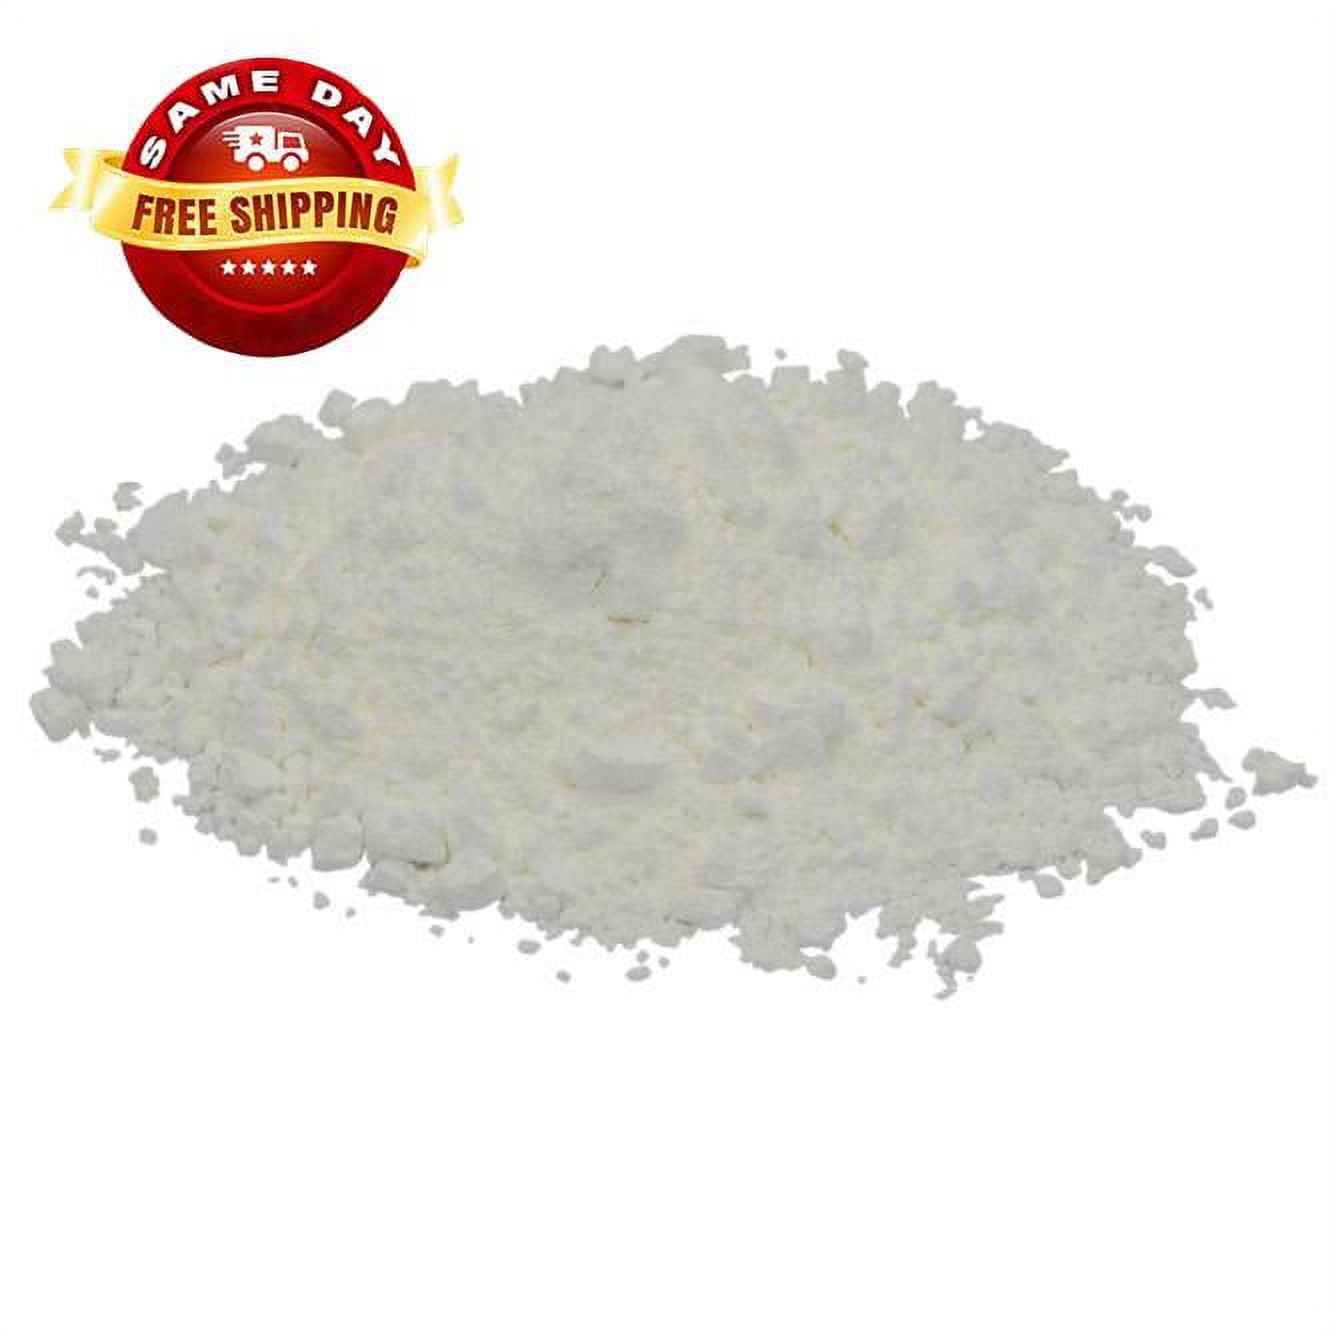 Black iron oxide powder pigment usp pharmaceutical grade for diy 2 oz buy